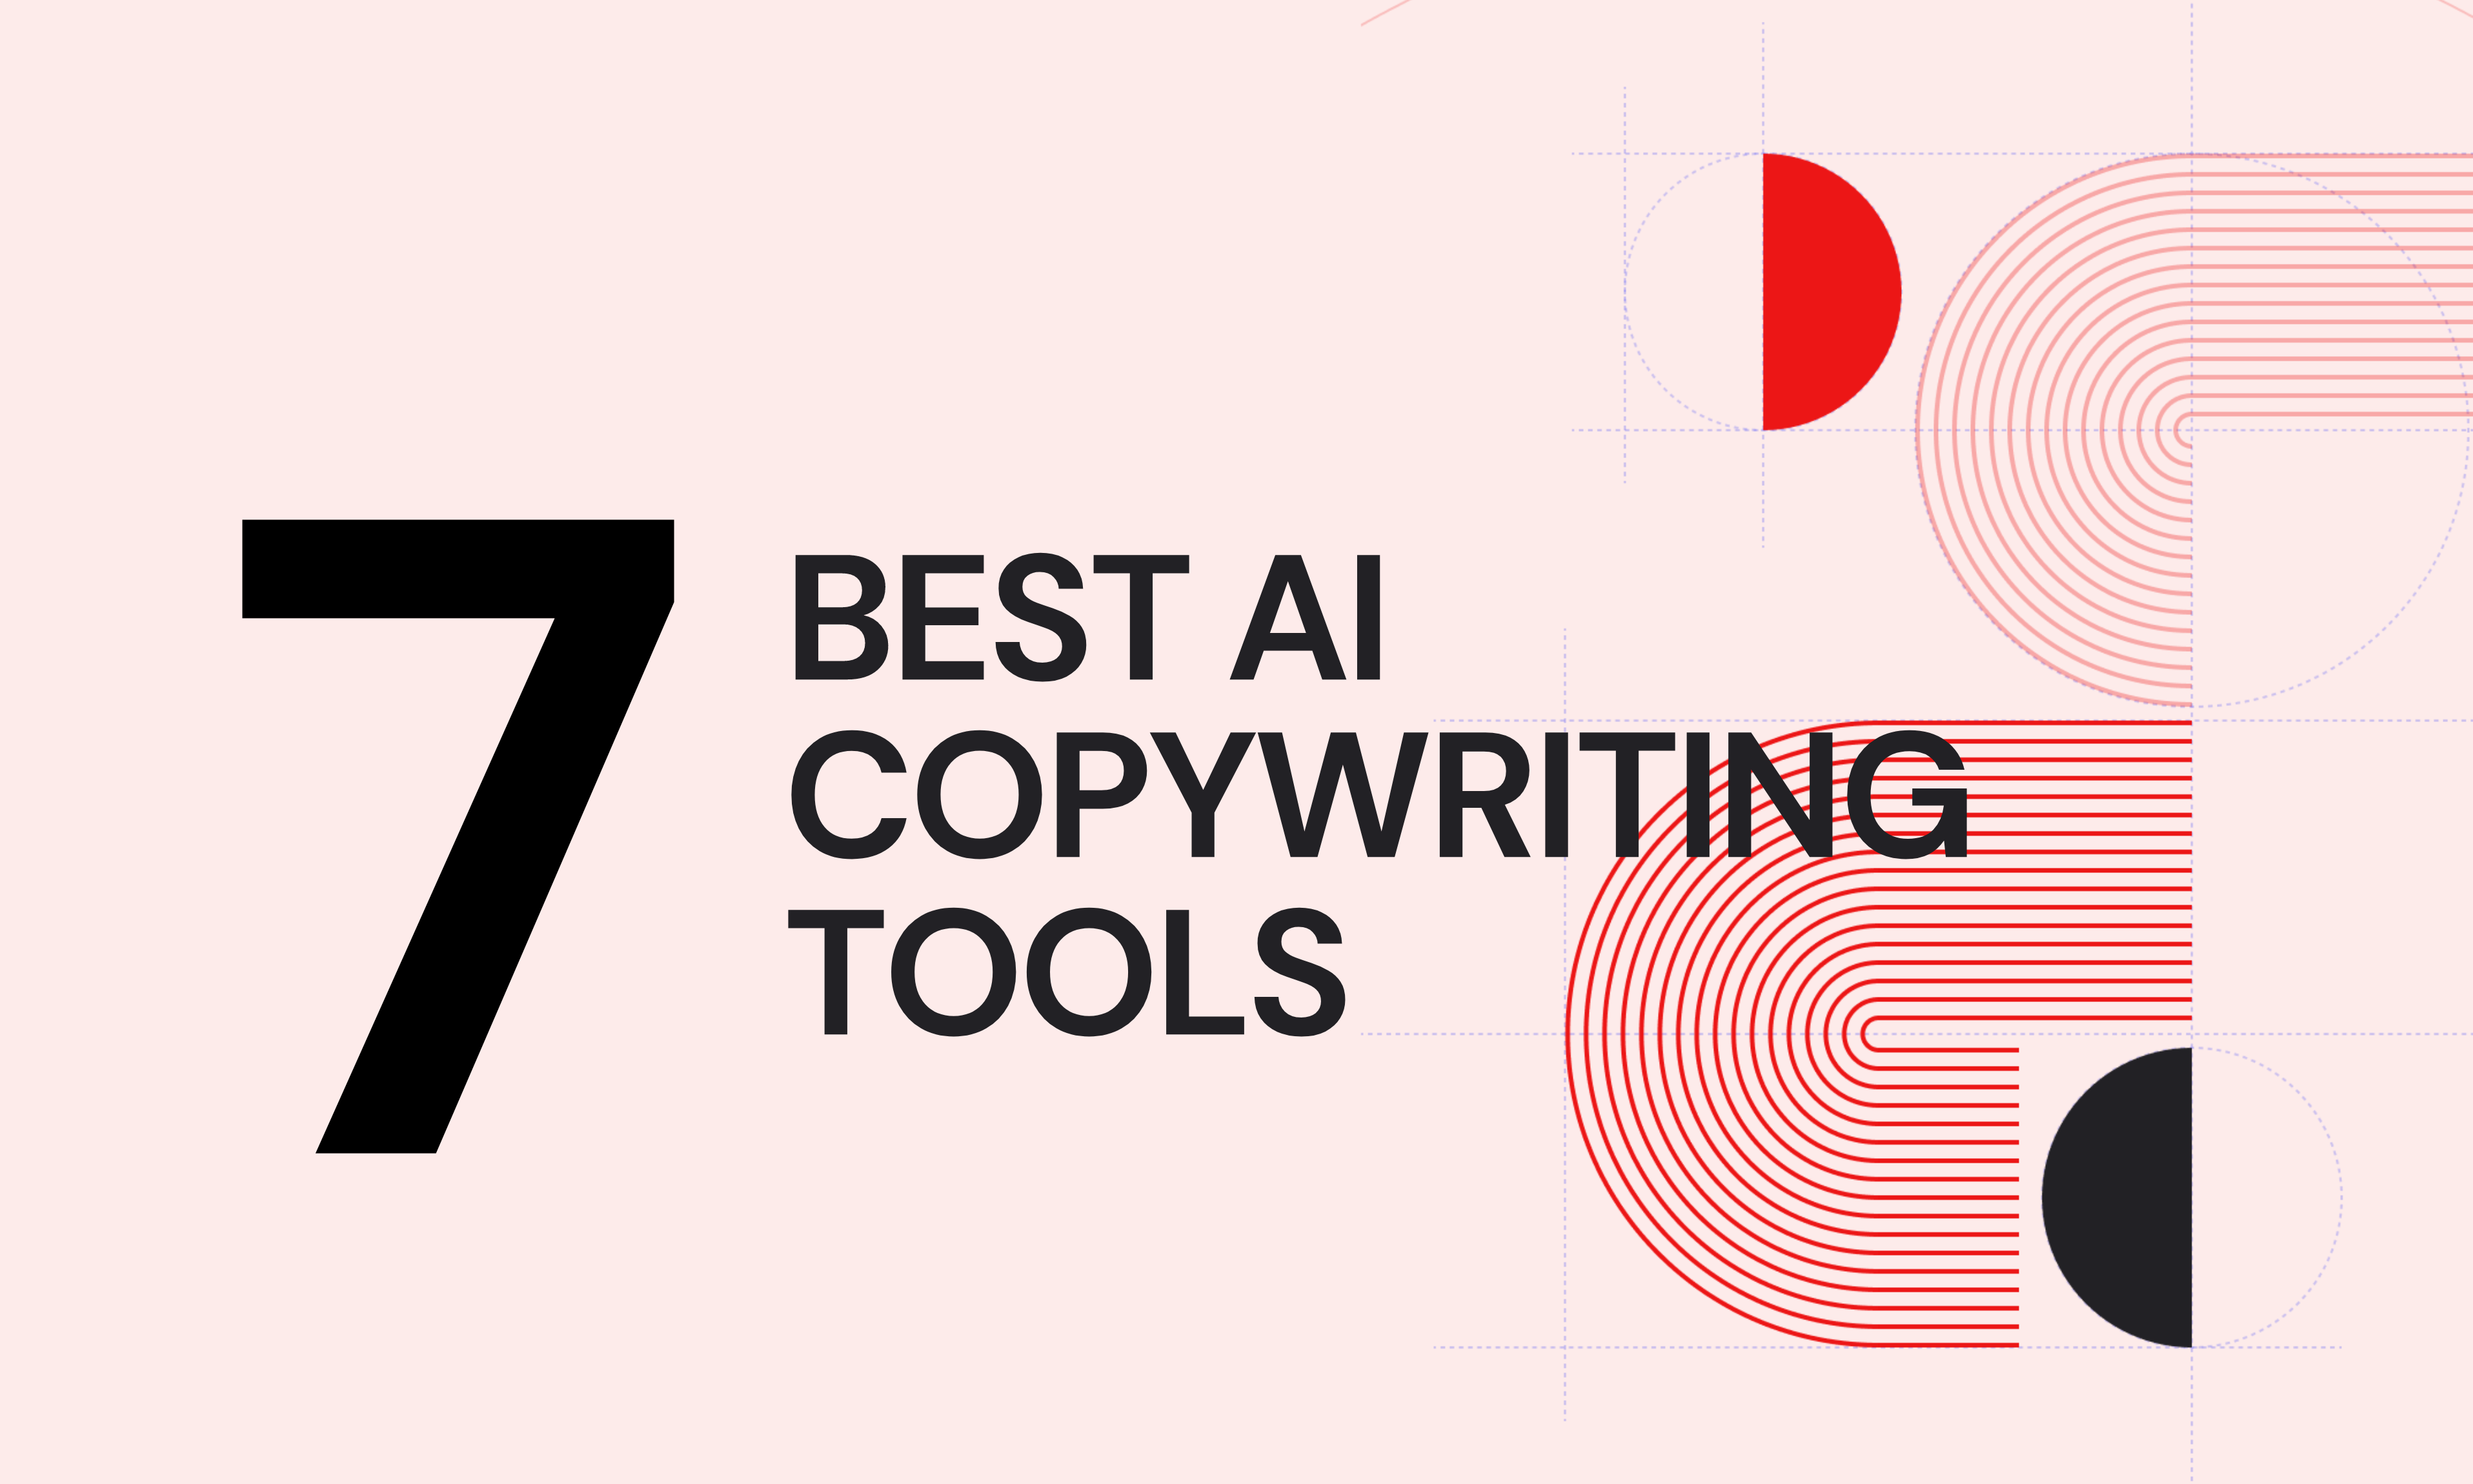 7 Best AI Copywriting Tools